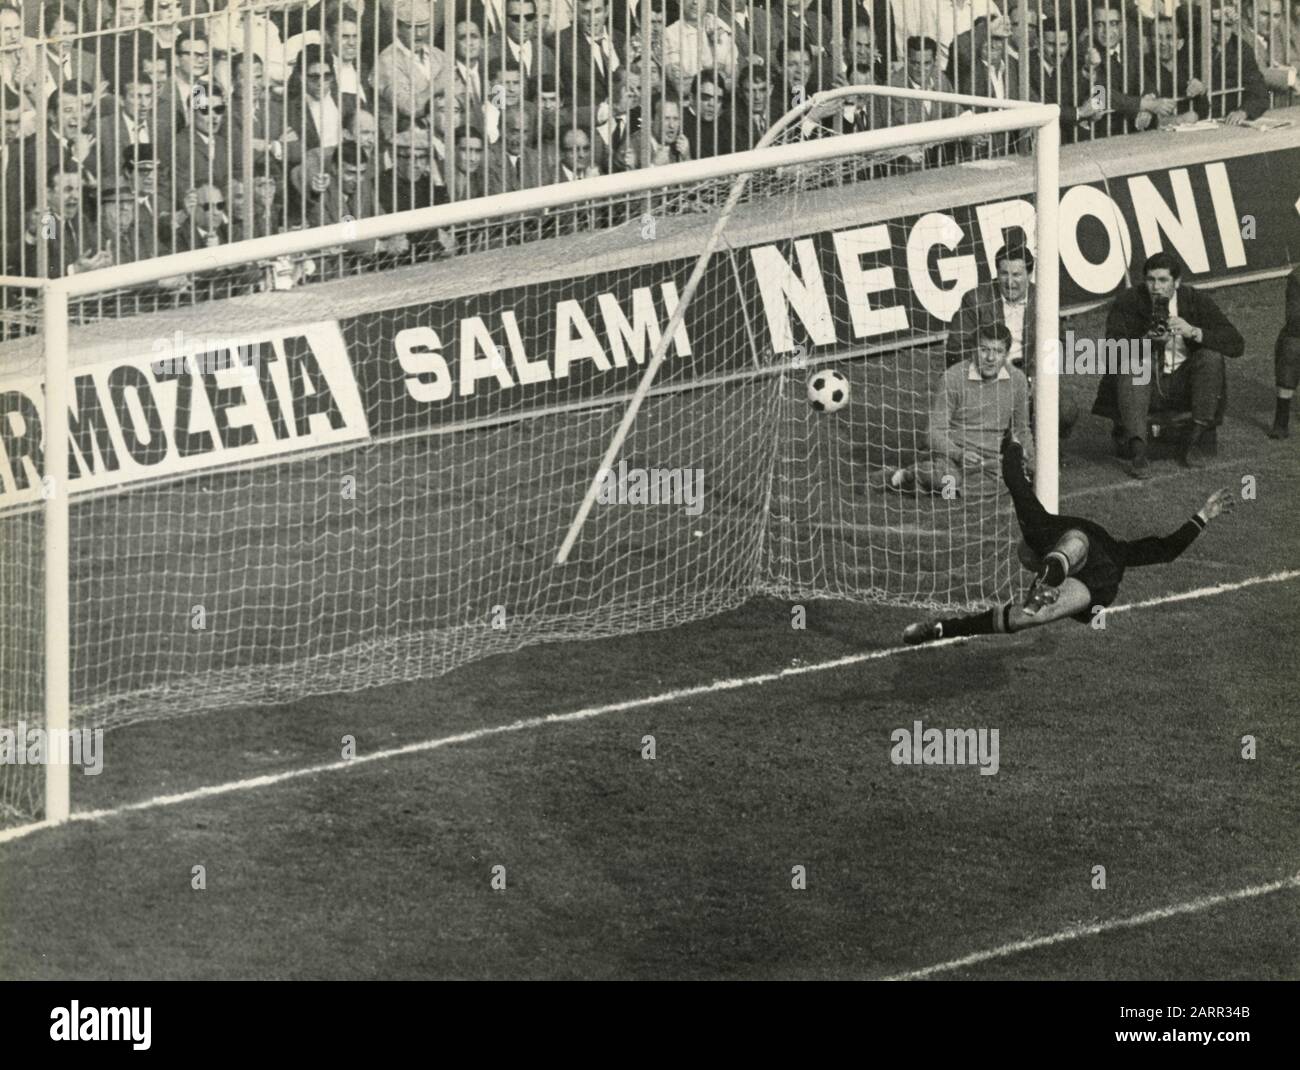 Scoring during a football match, Milan, Italy 1970s Stock Photo